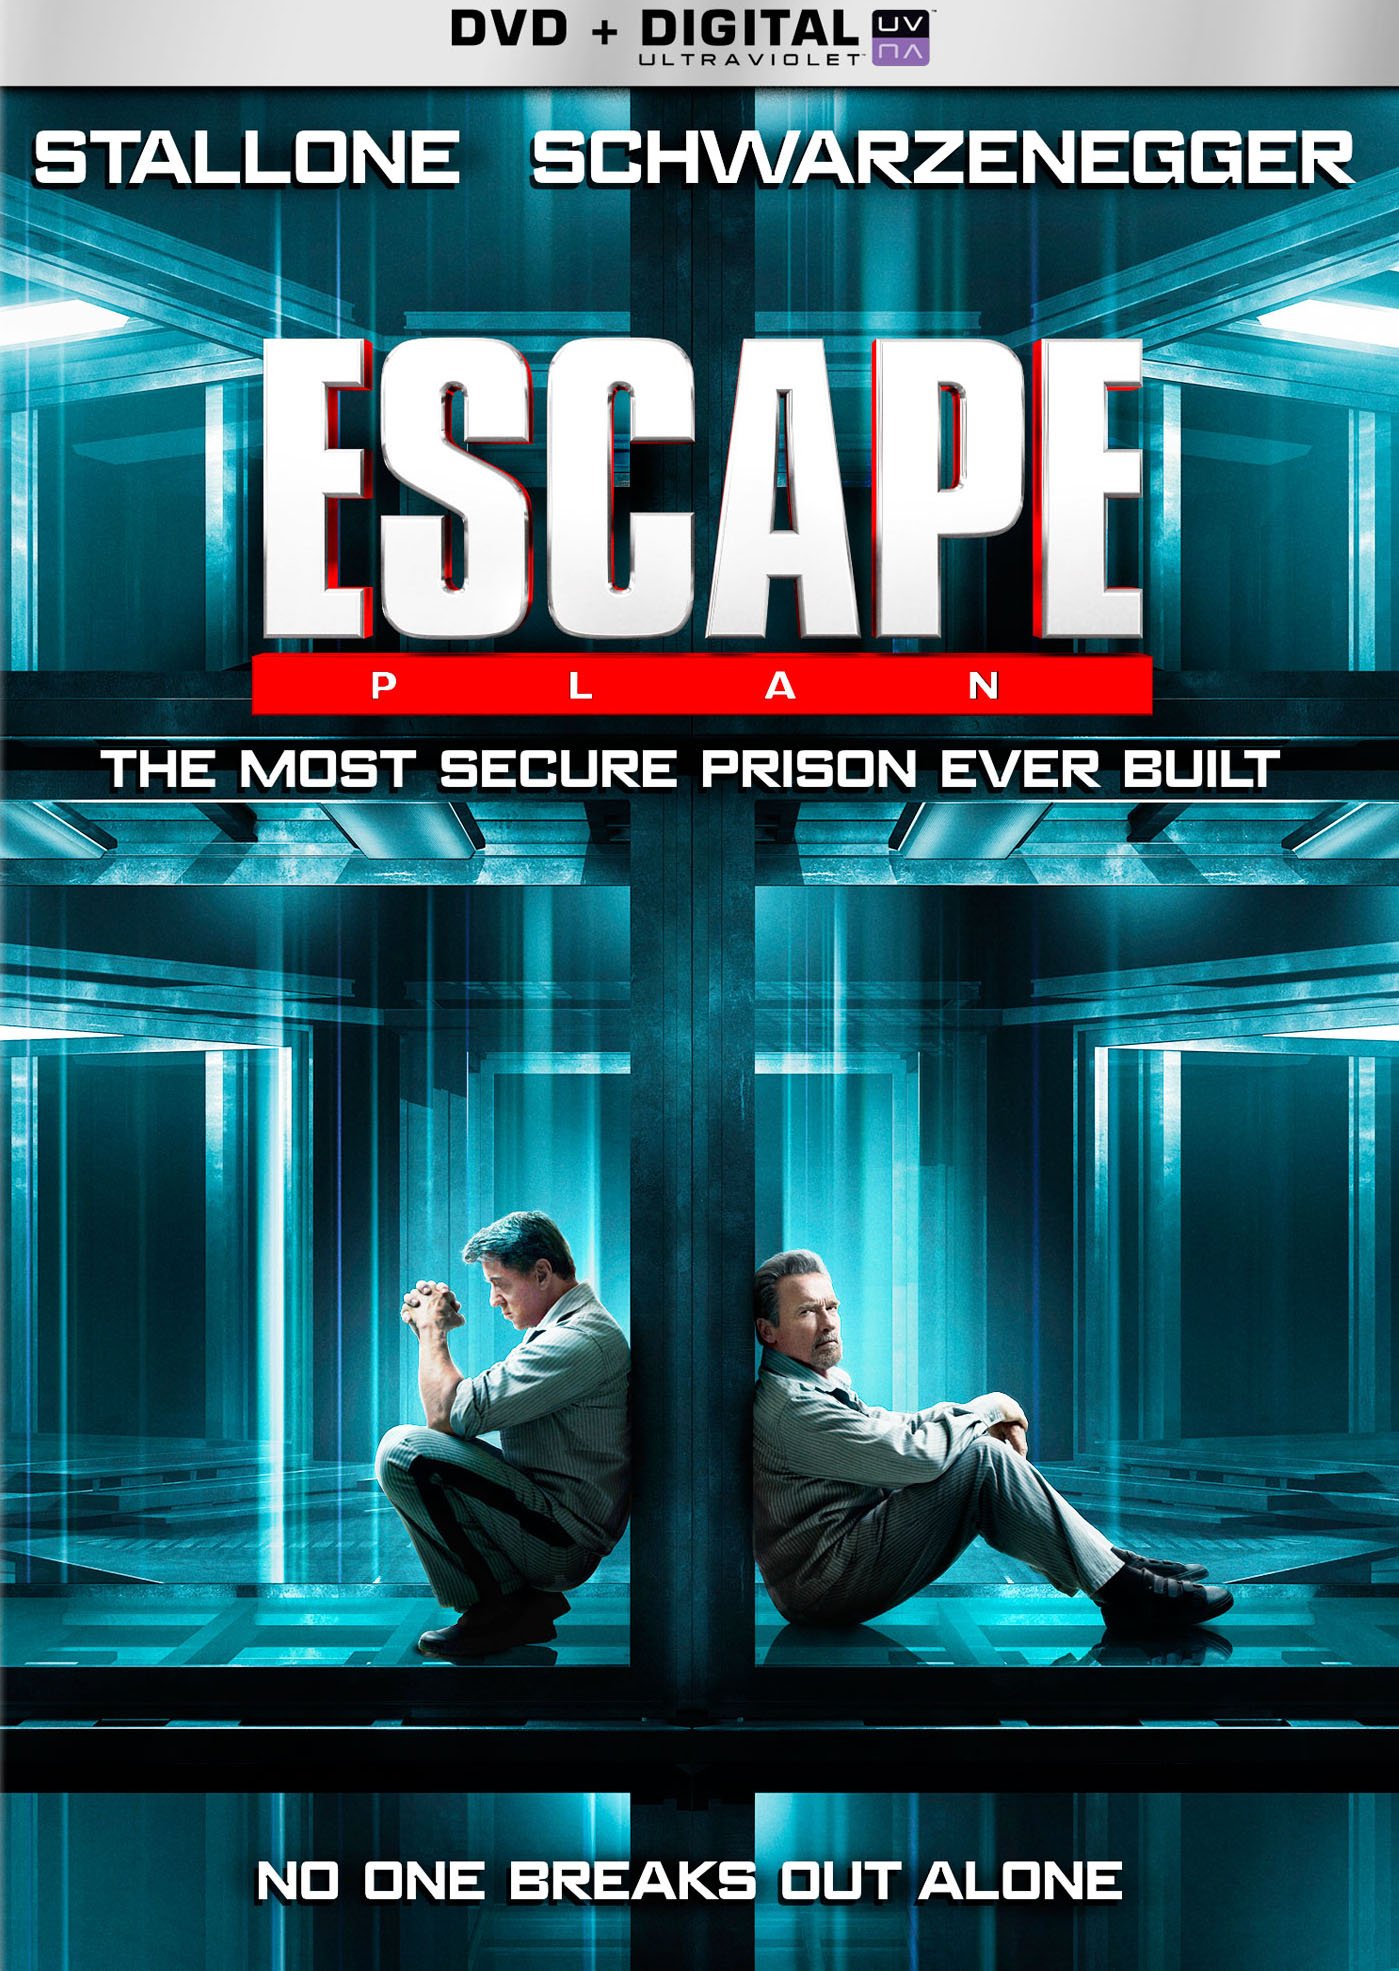 Escape Plan DVD Release Date February 4, 2014